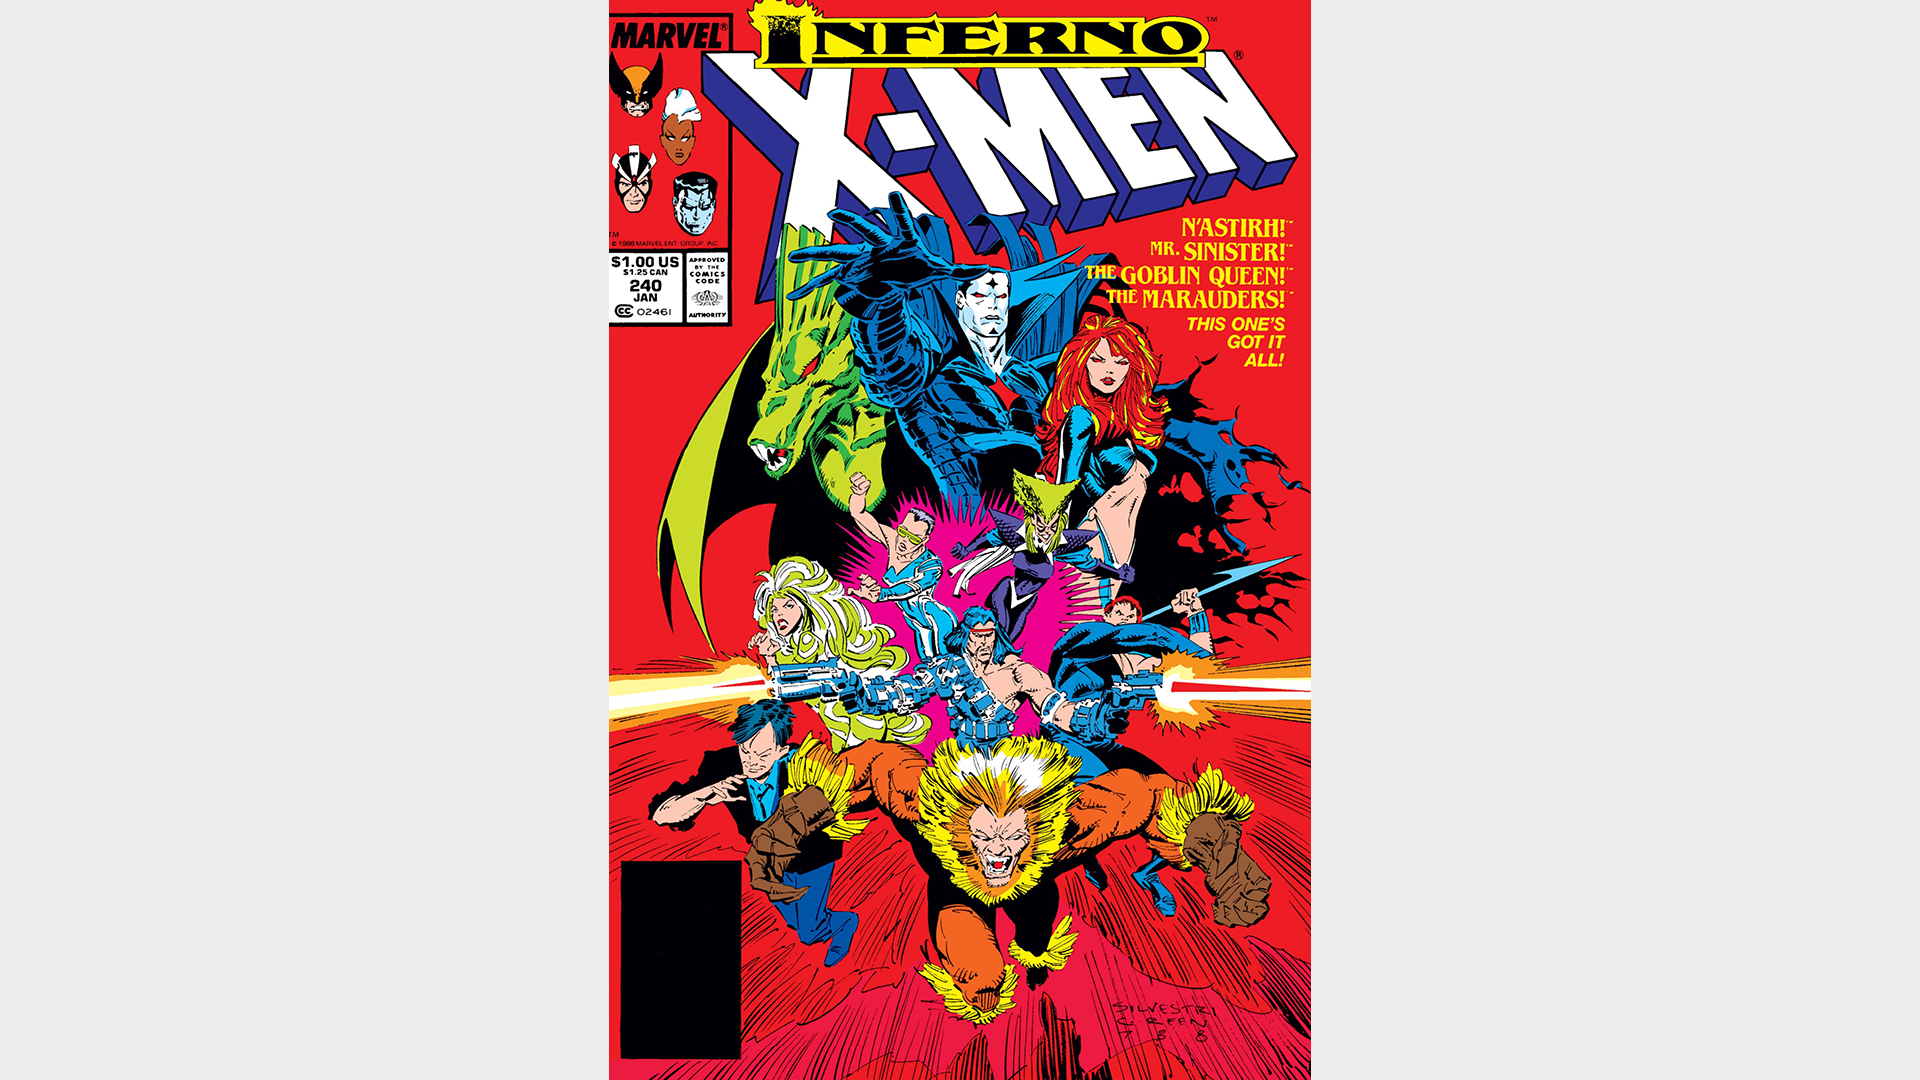 X-Men: Inferno